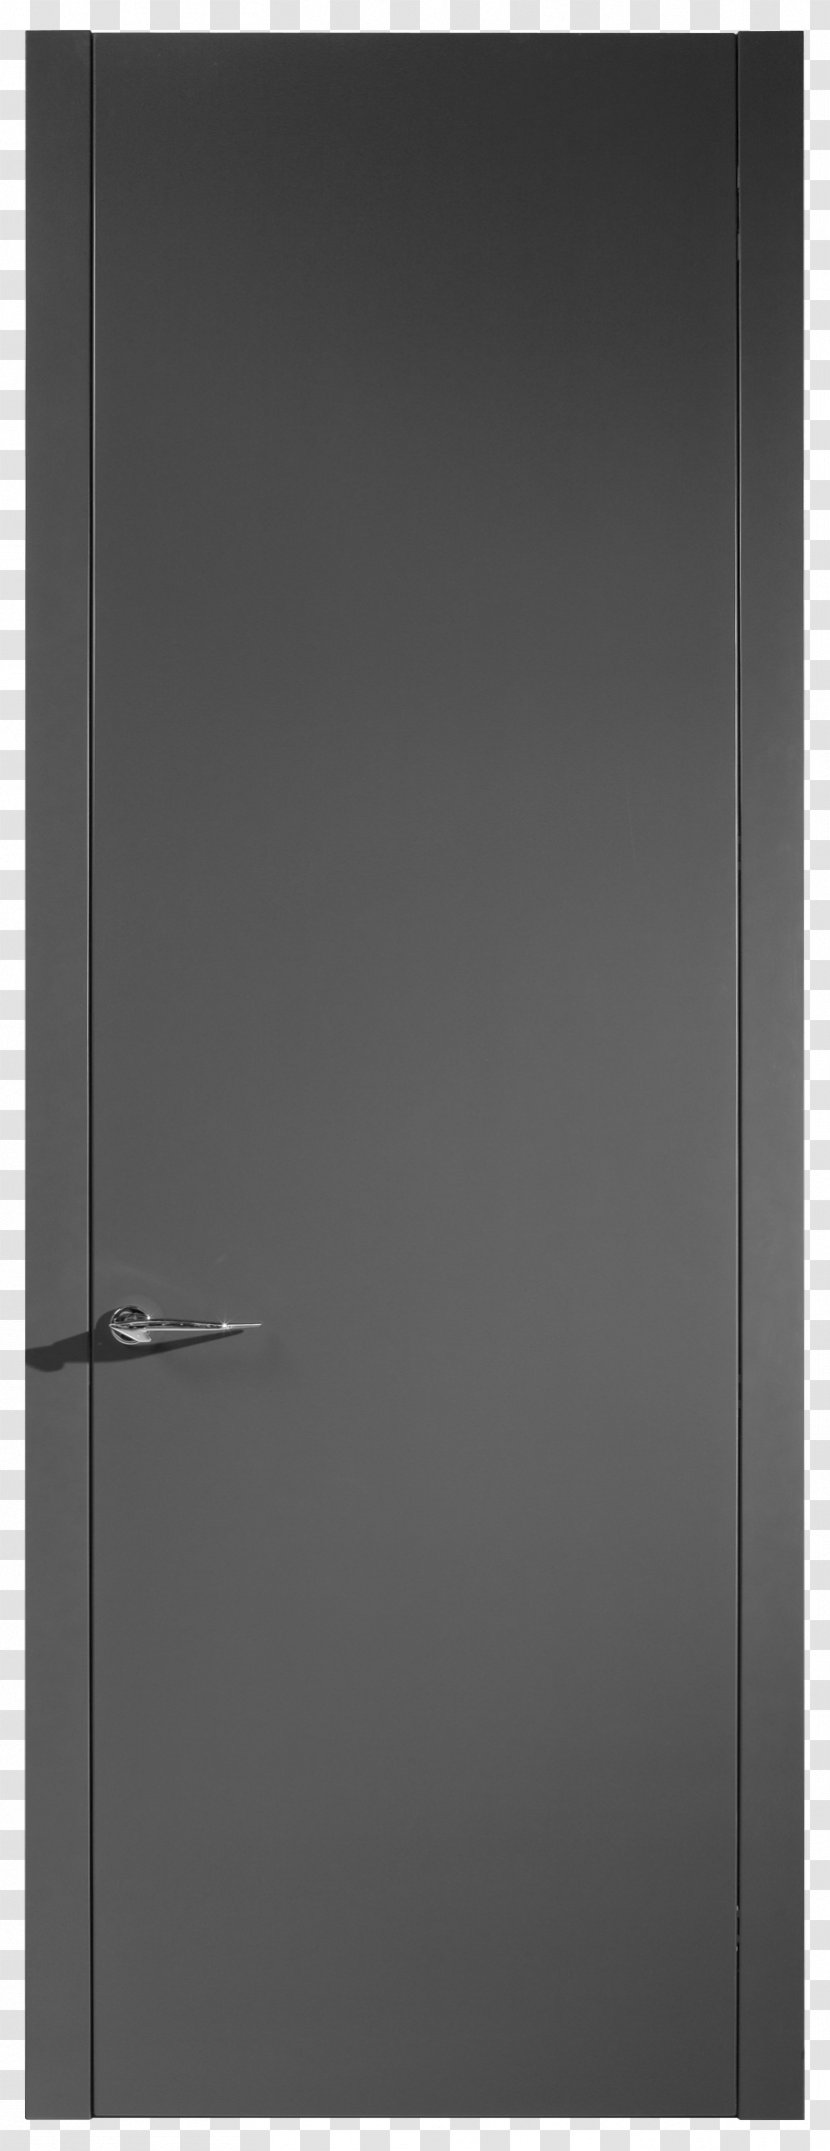 Angle Door - Design Transparent PNG